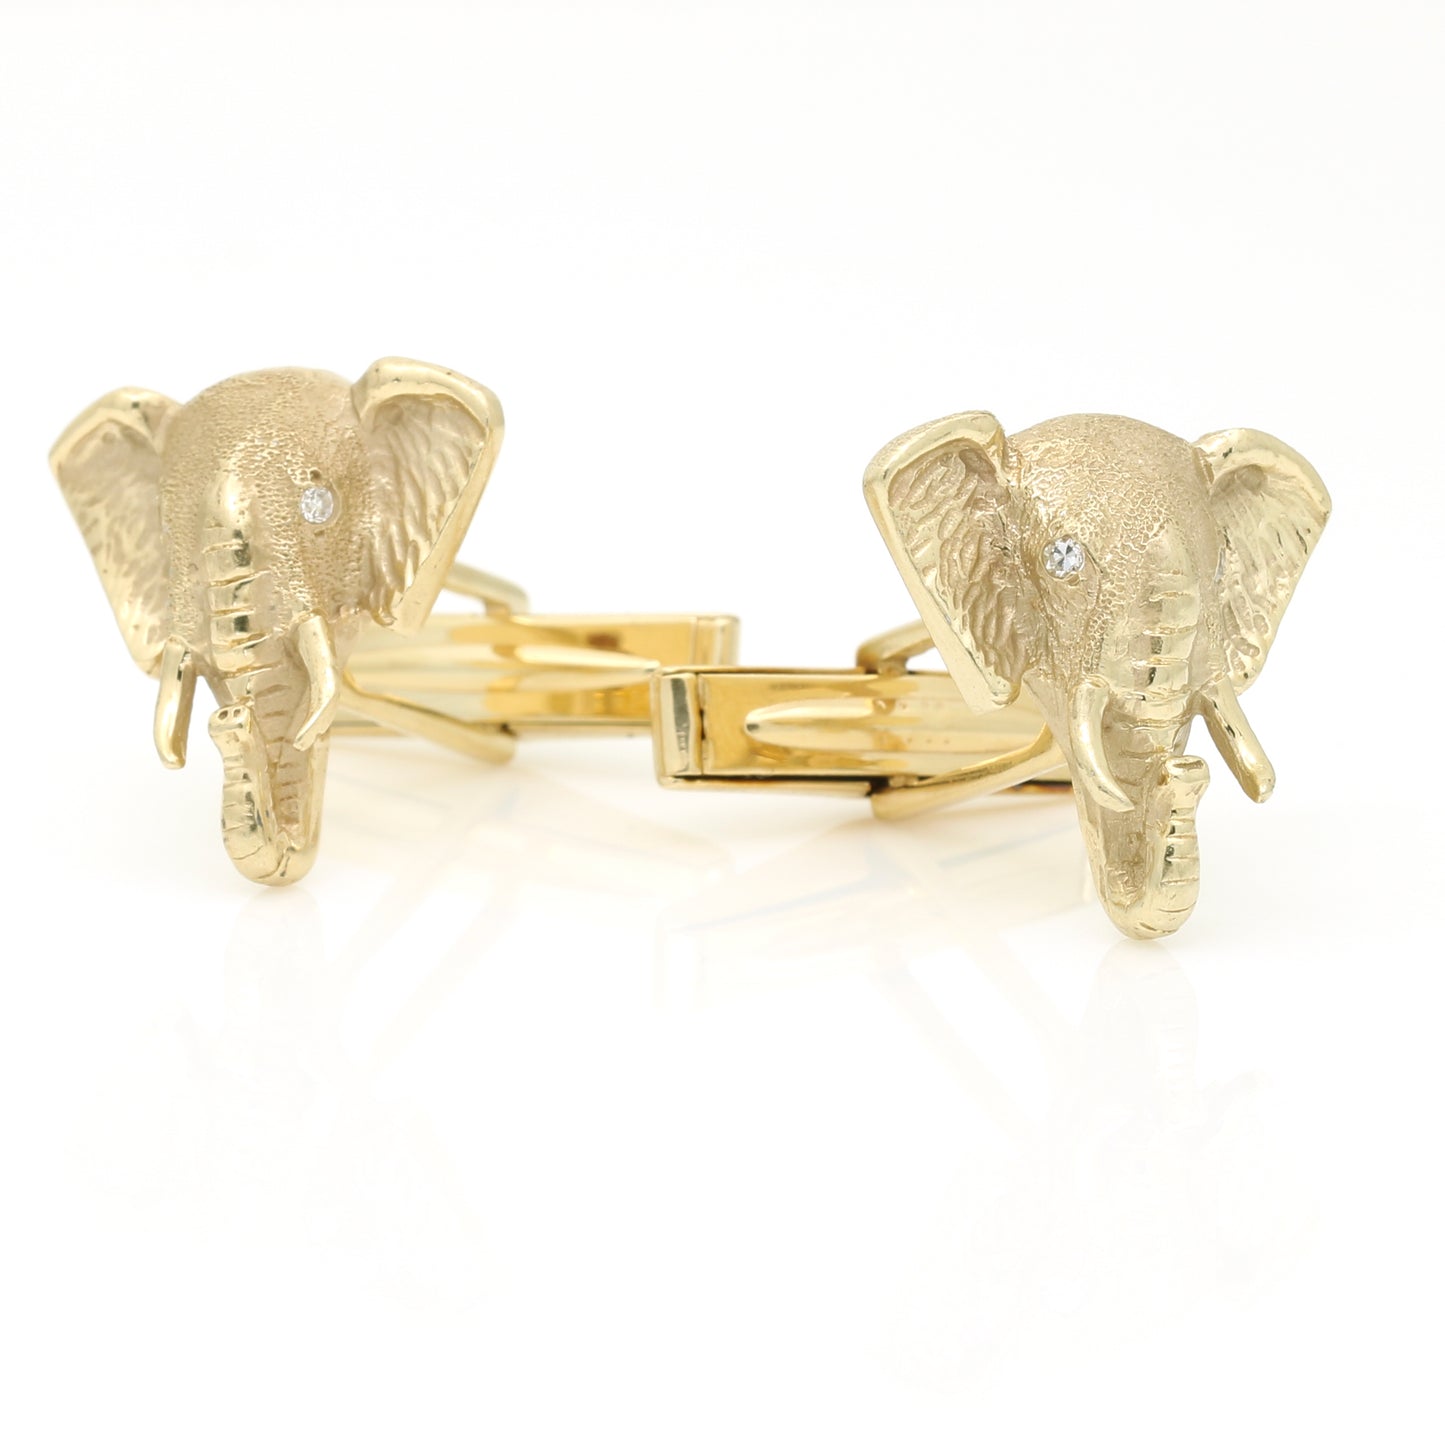 Elephant Cufflinks - 14k Yellow Gold with Diamond Eyes | Vintage